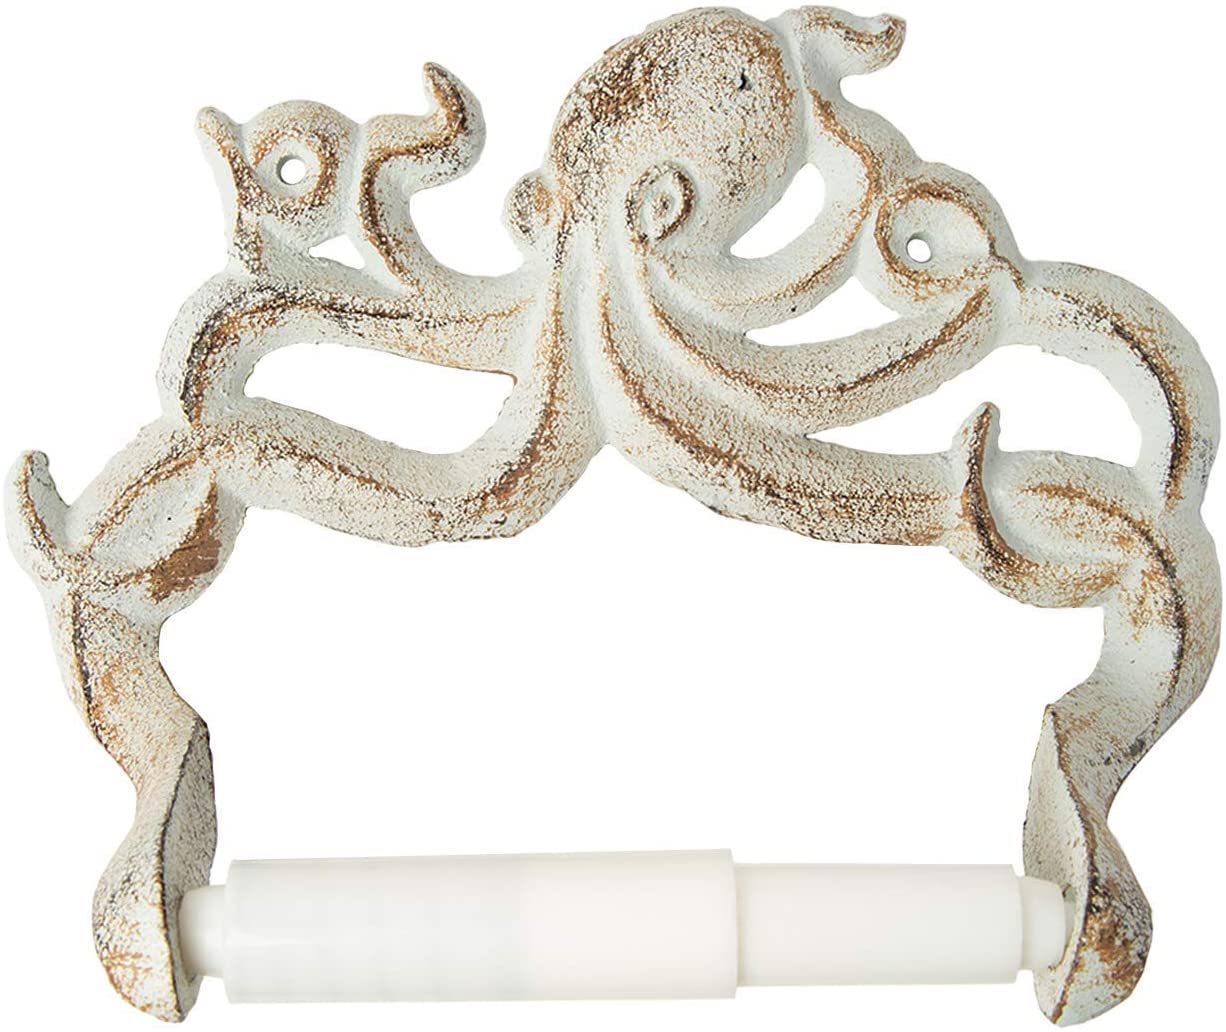 Comfify Vintage Octopus Bathroom Toilet Paper Holder Beach Decor